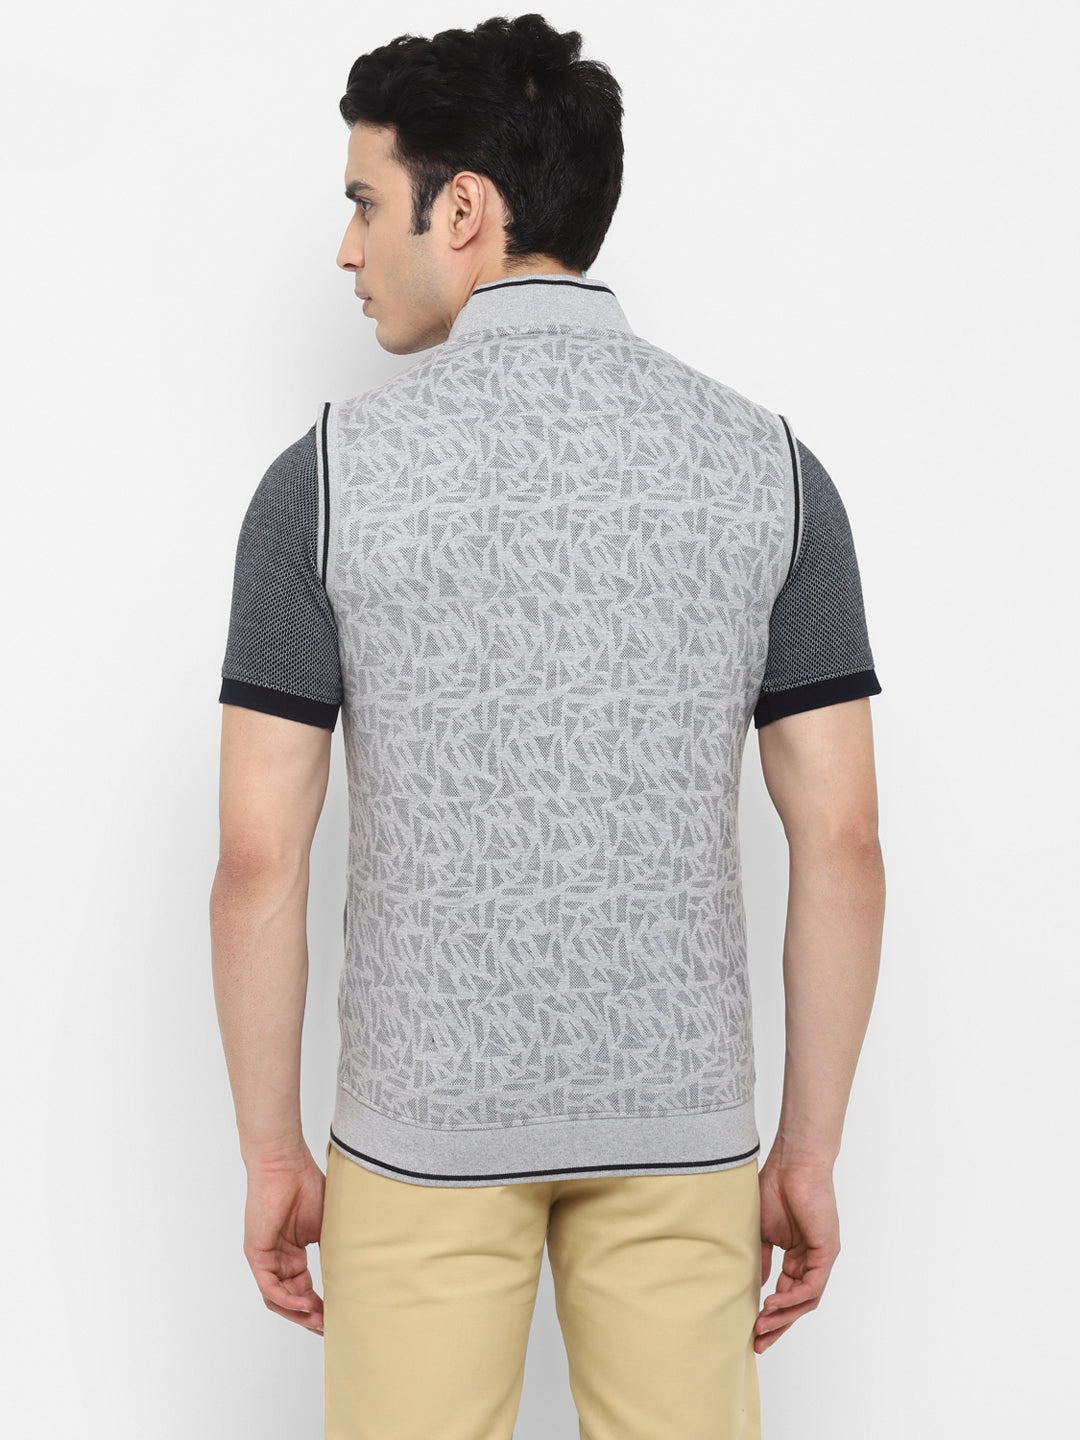 Printed Grey Sleeveless Sweatshirt for Men